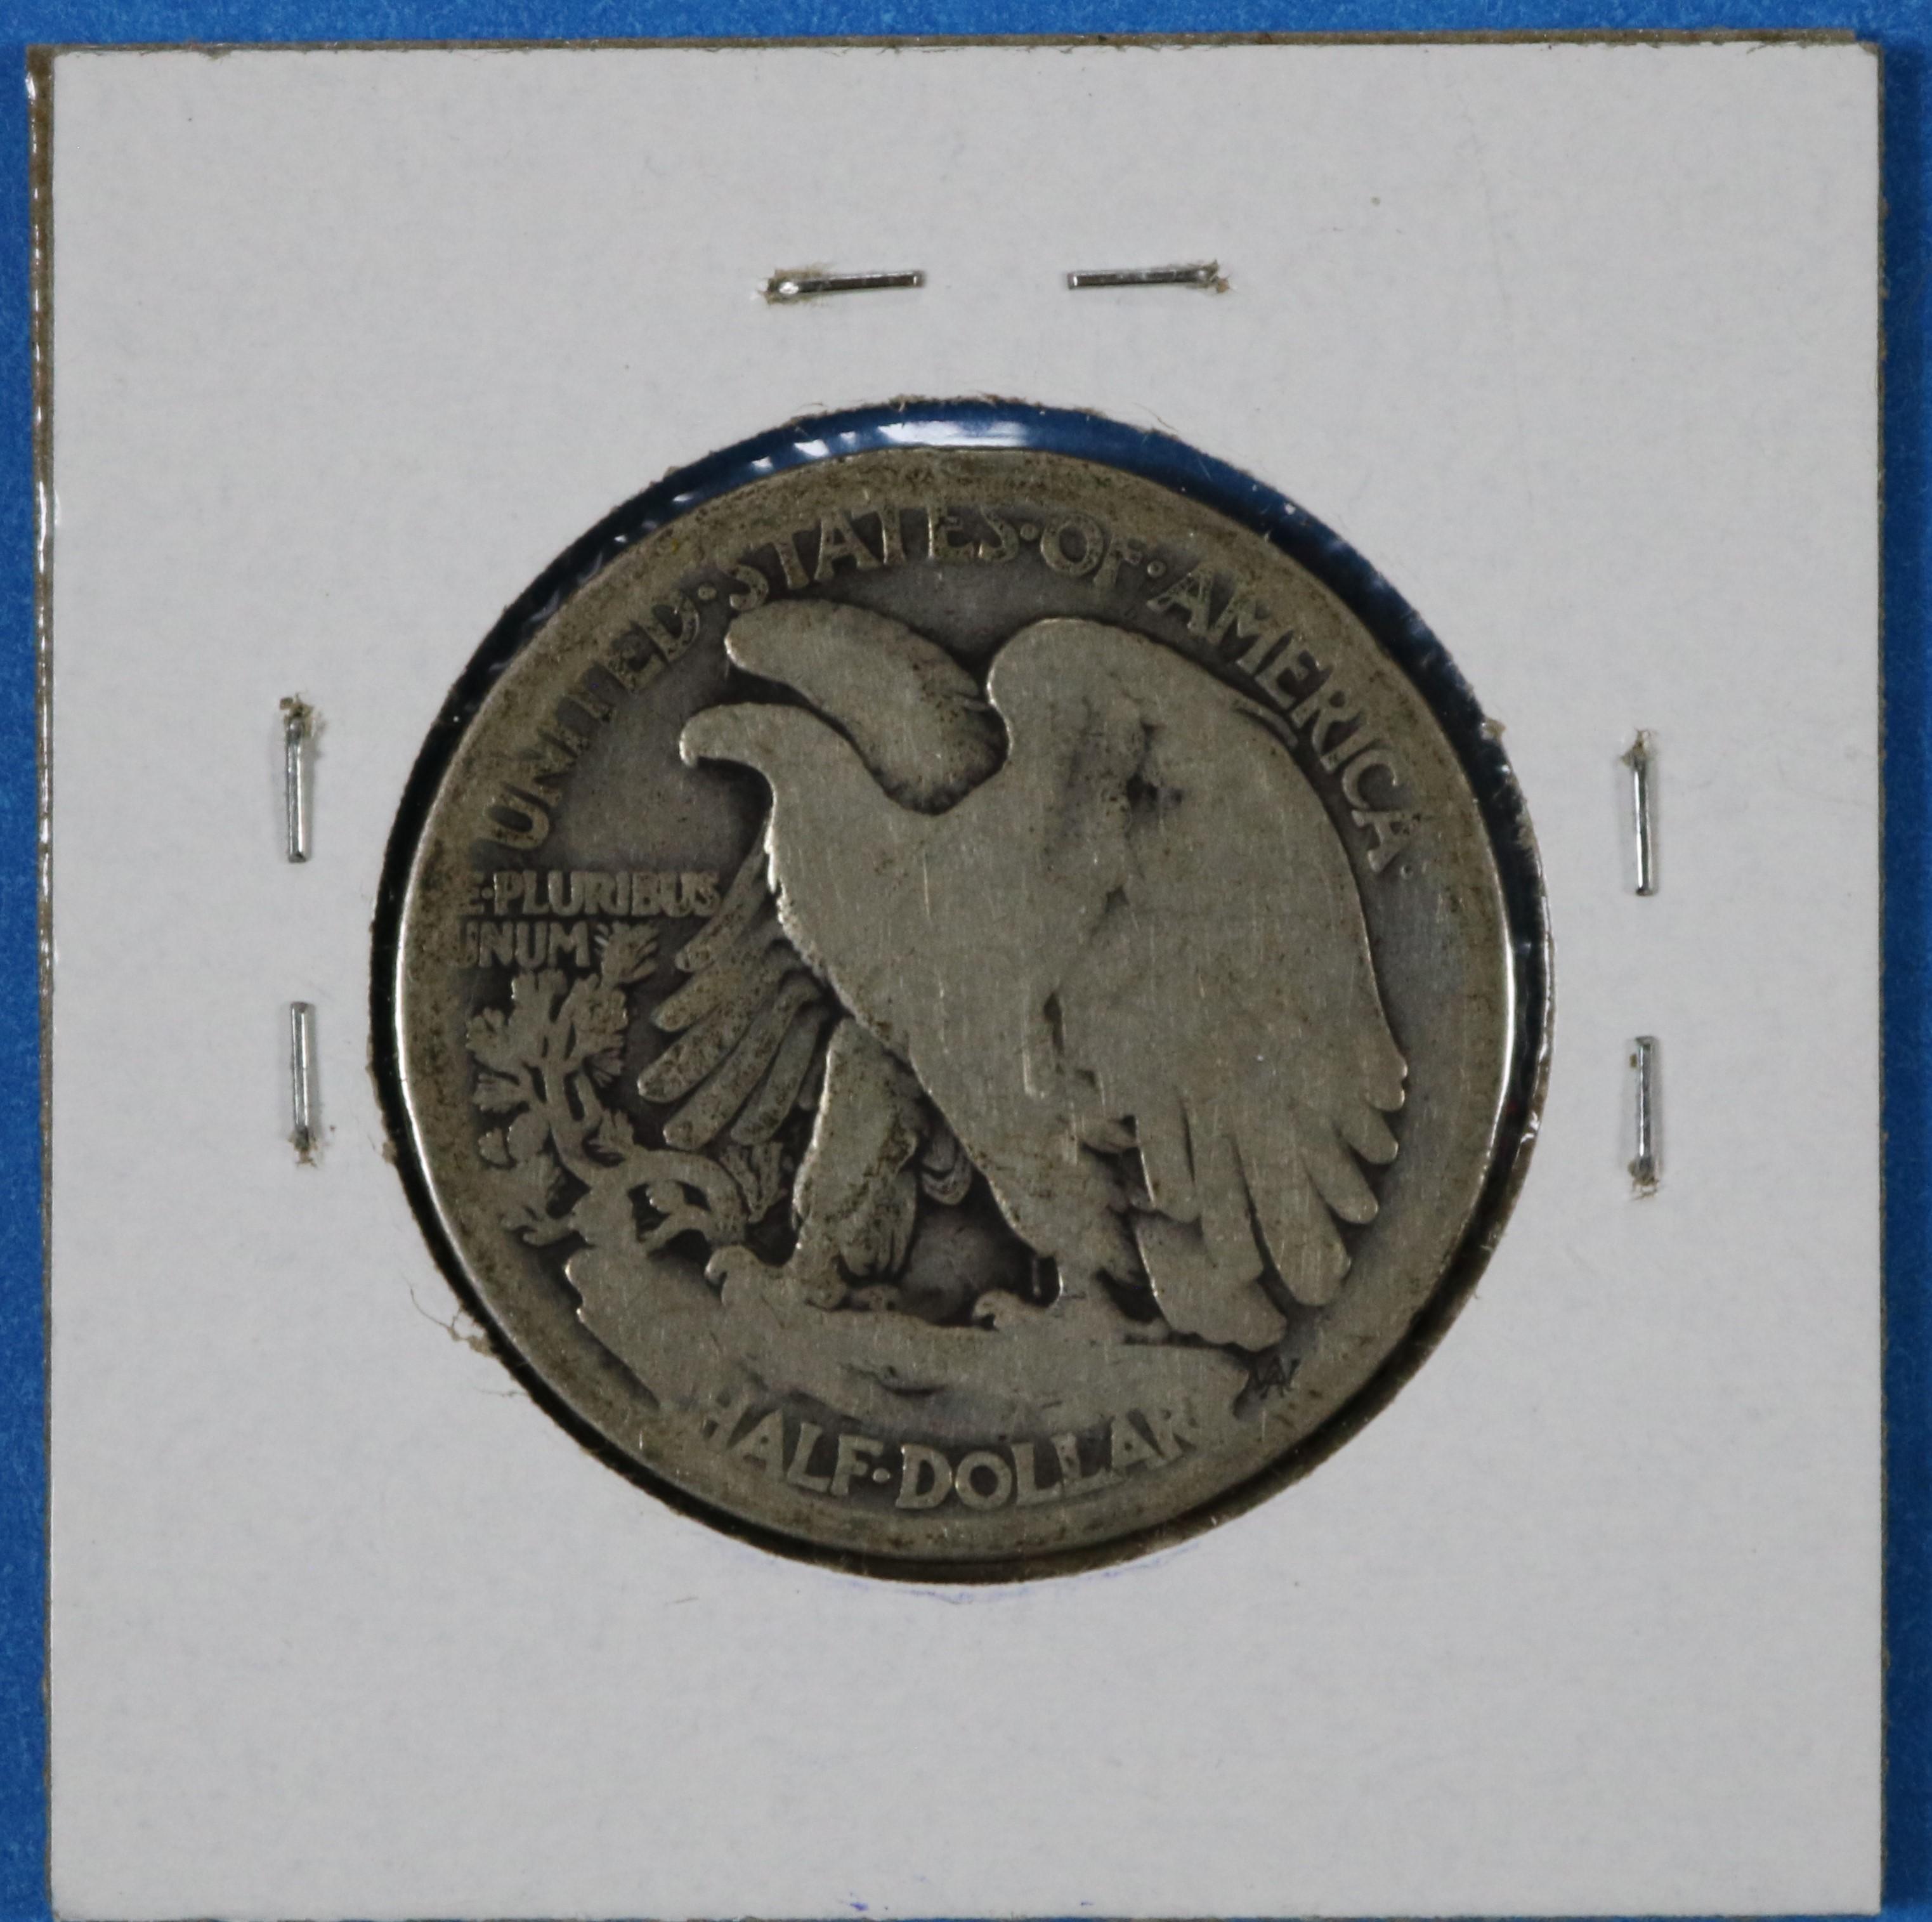 1917 Walking Liberty Silver Half Dollar Coin